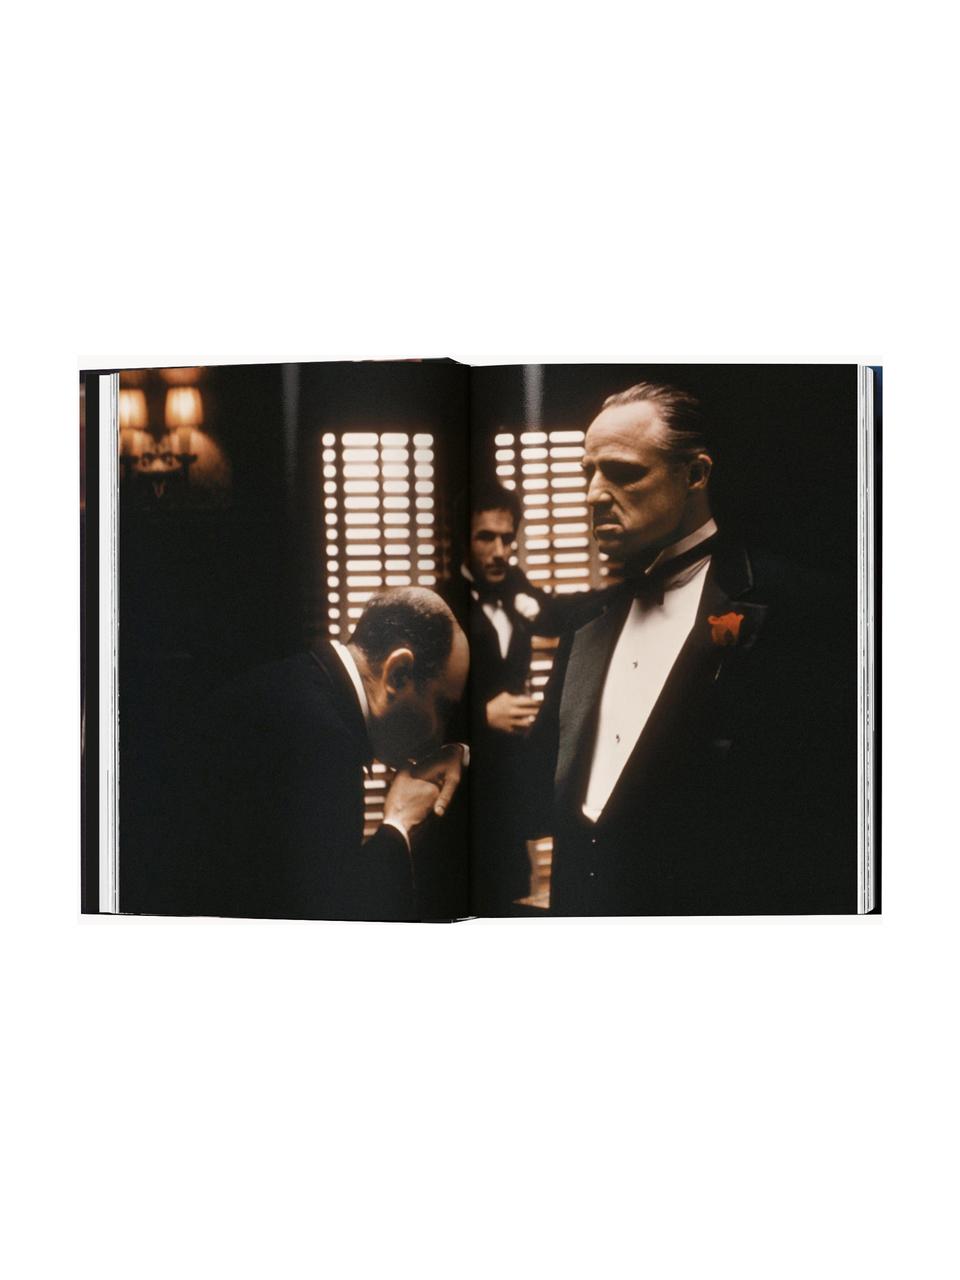 Geïllustreerd boek The Godfather The family album, Papier, hardcover, The Godfather The family album, B 16 x H 22 cm